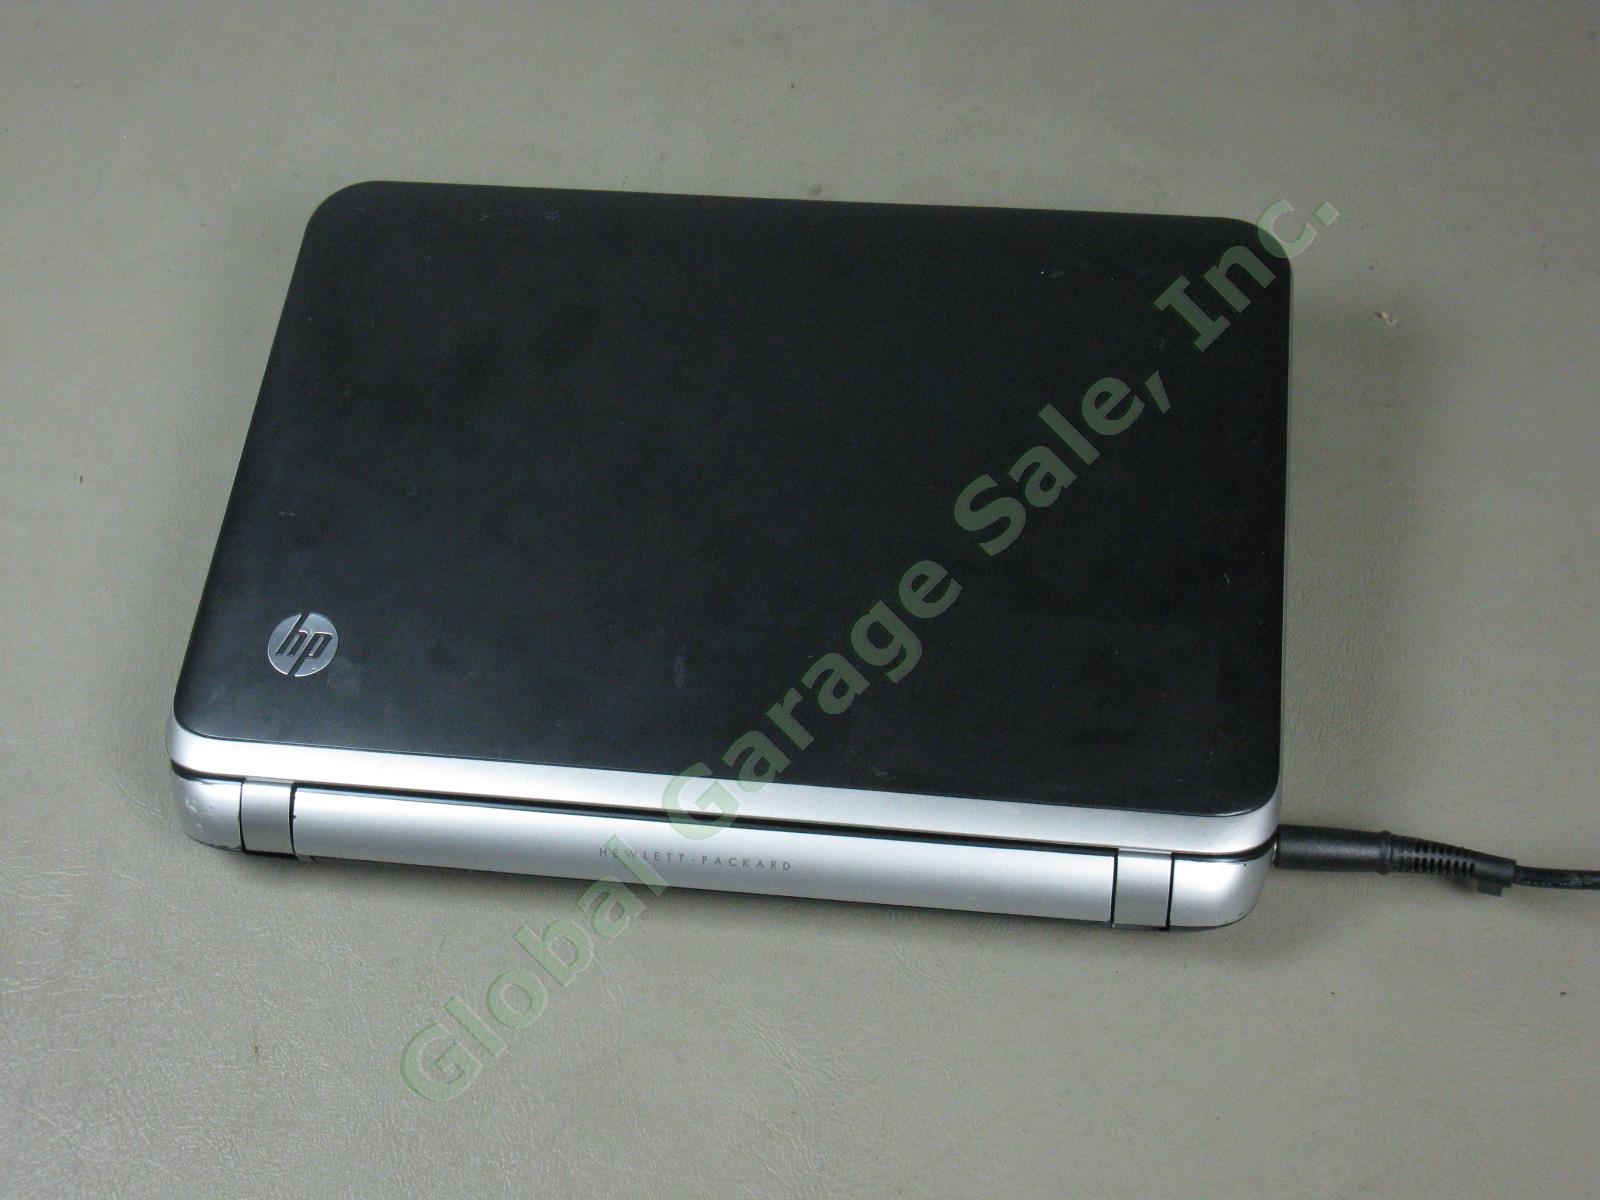 HP 3115m 11.6" Notebook Laptop Computer 1.65GHz 4GB RAM 320GB Windows 7 Ultimate 3